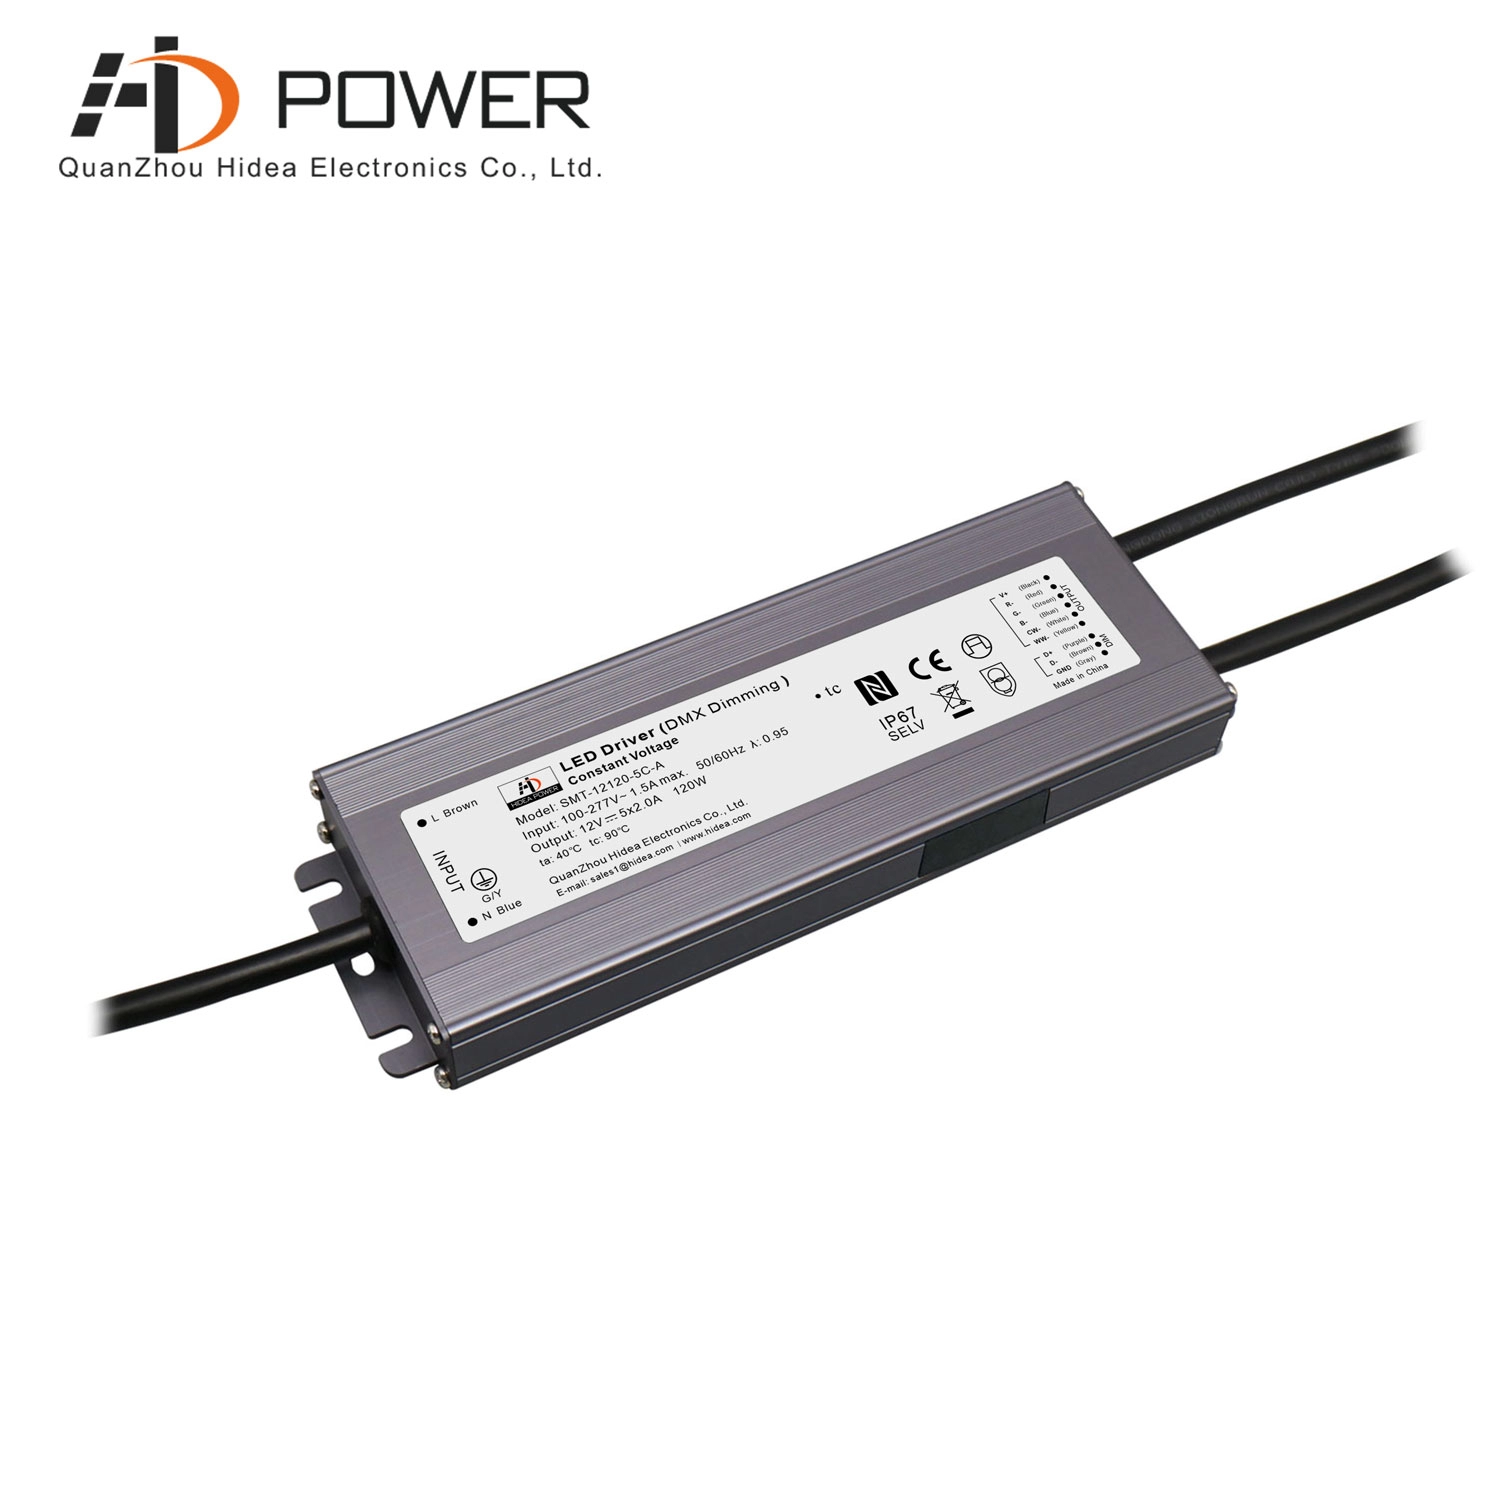 12-V-DMX-dimmbarer LED-Streifen-Netzteiltreiber IP67